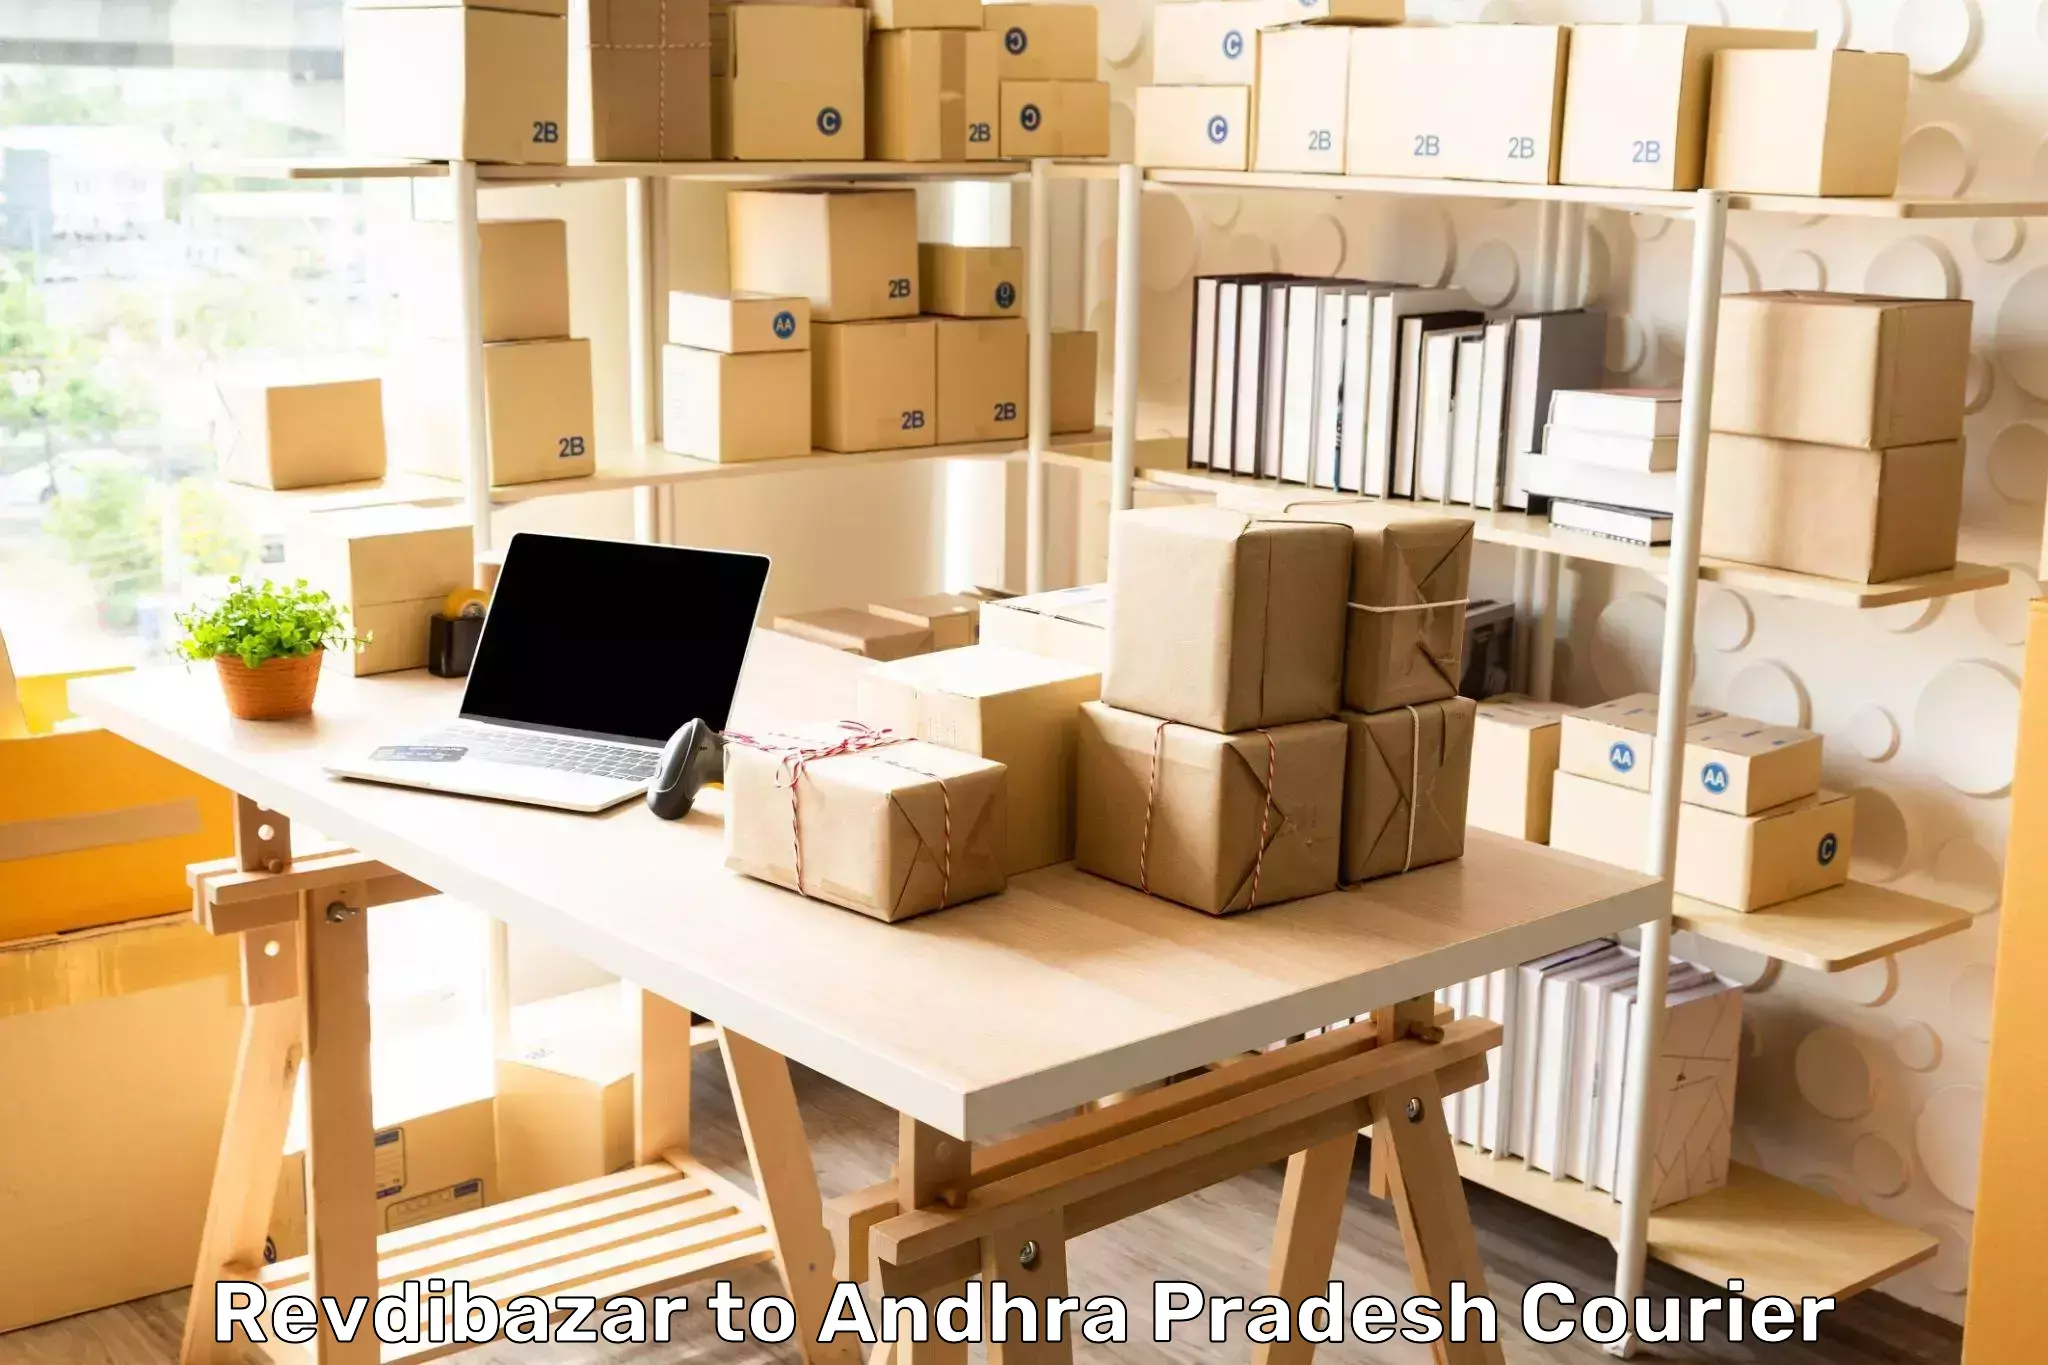 Efficient courier operations Revdibazar to Andhra Pradesh